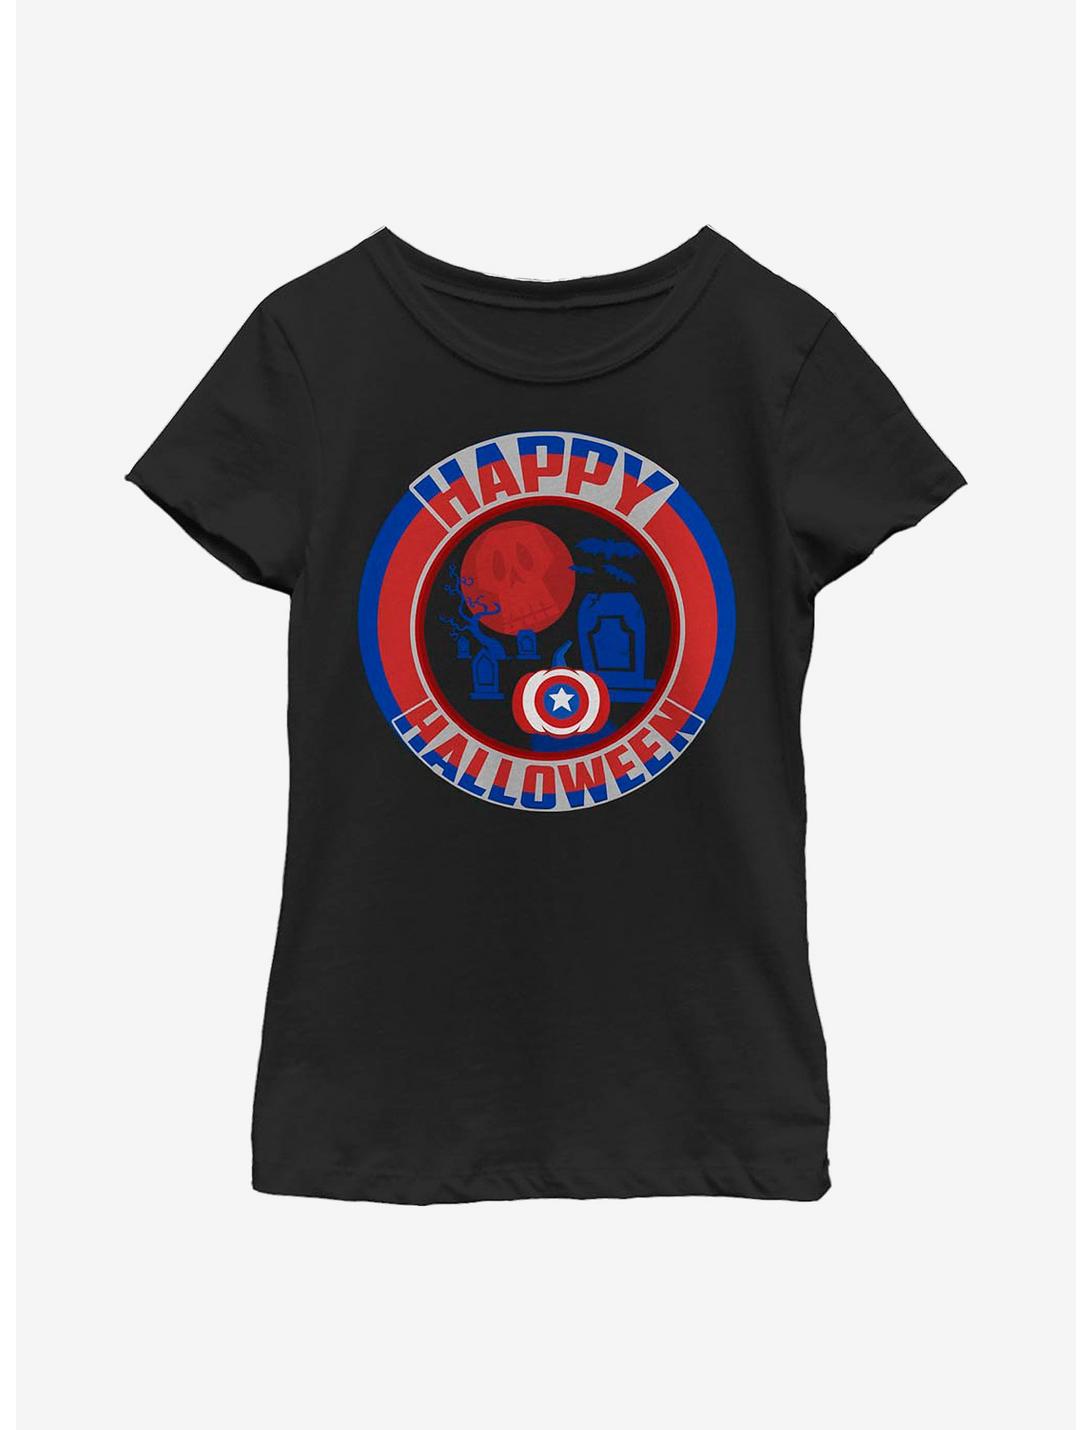 Marvel Captain America Happy Halloween Youth Girls T-Shirt, BLACK, hi-res